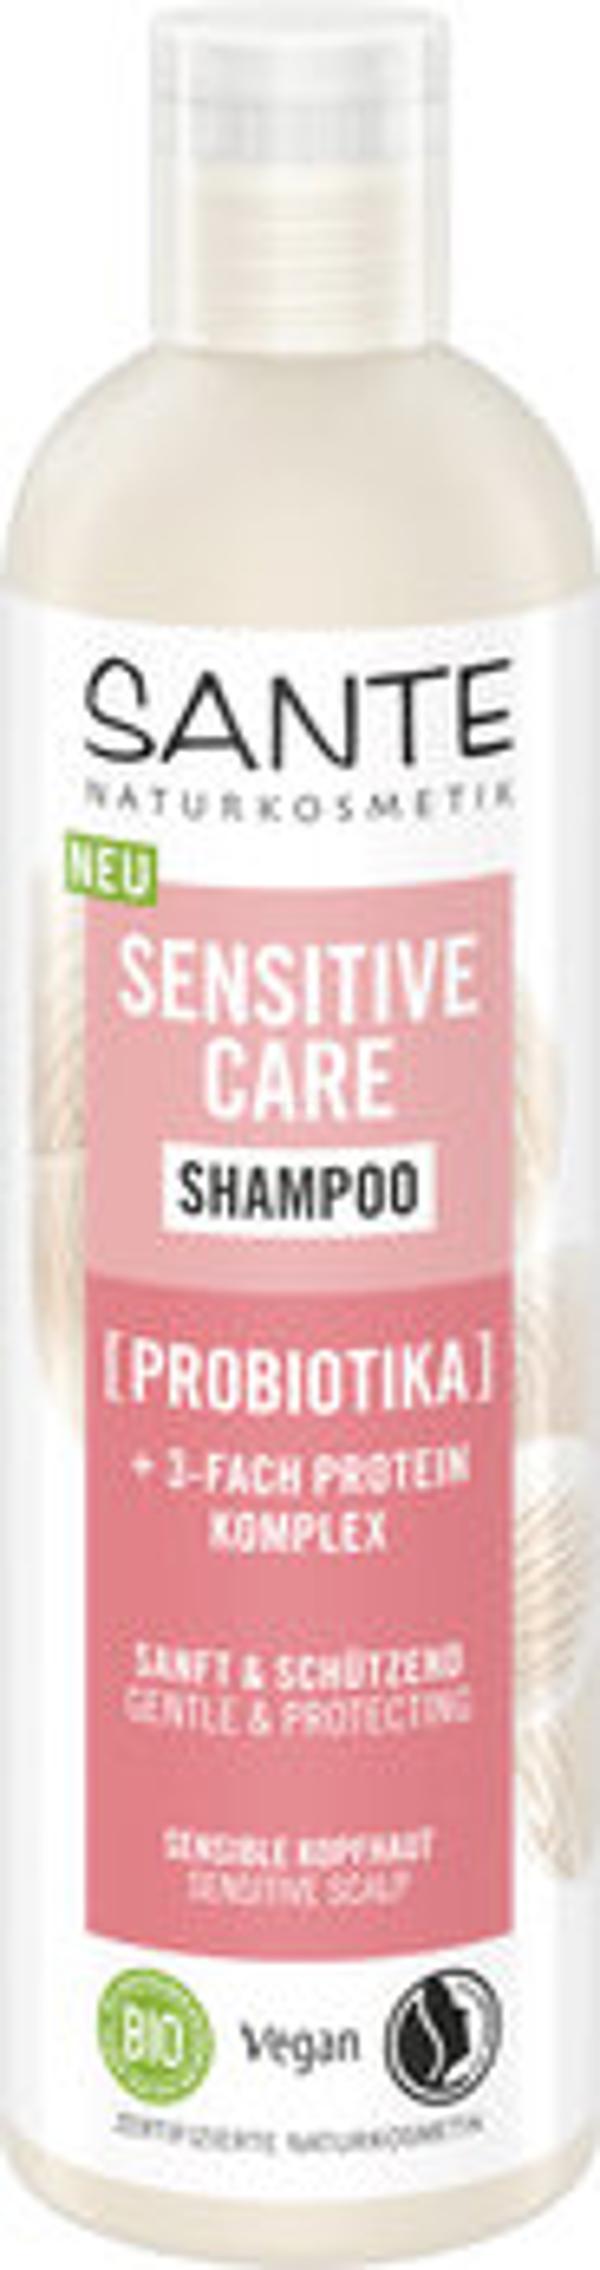 Produktfoto zu Sensitive Care Shampoo Probiotika, 250 ml